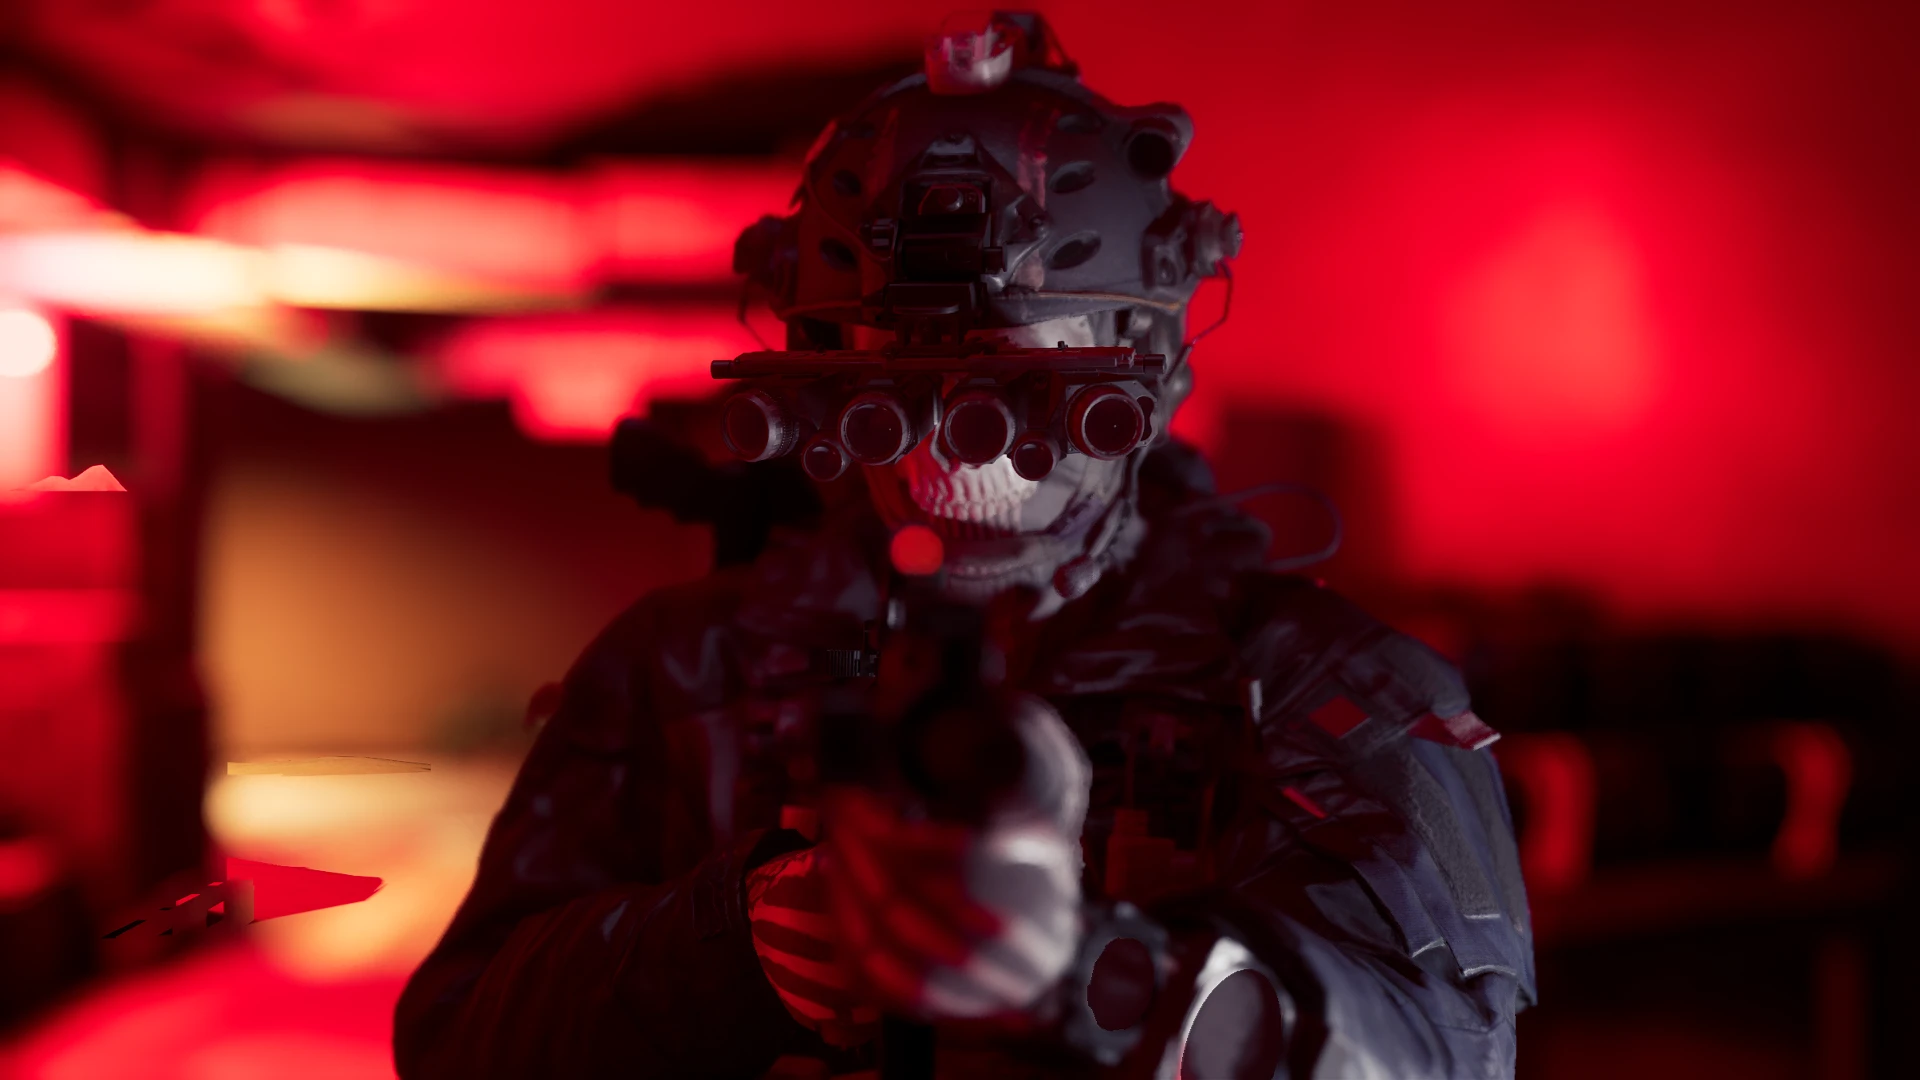 Simon Ghost Riley - Modern Warfare II at Ready or Not Nexus - Mods